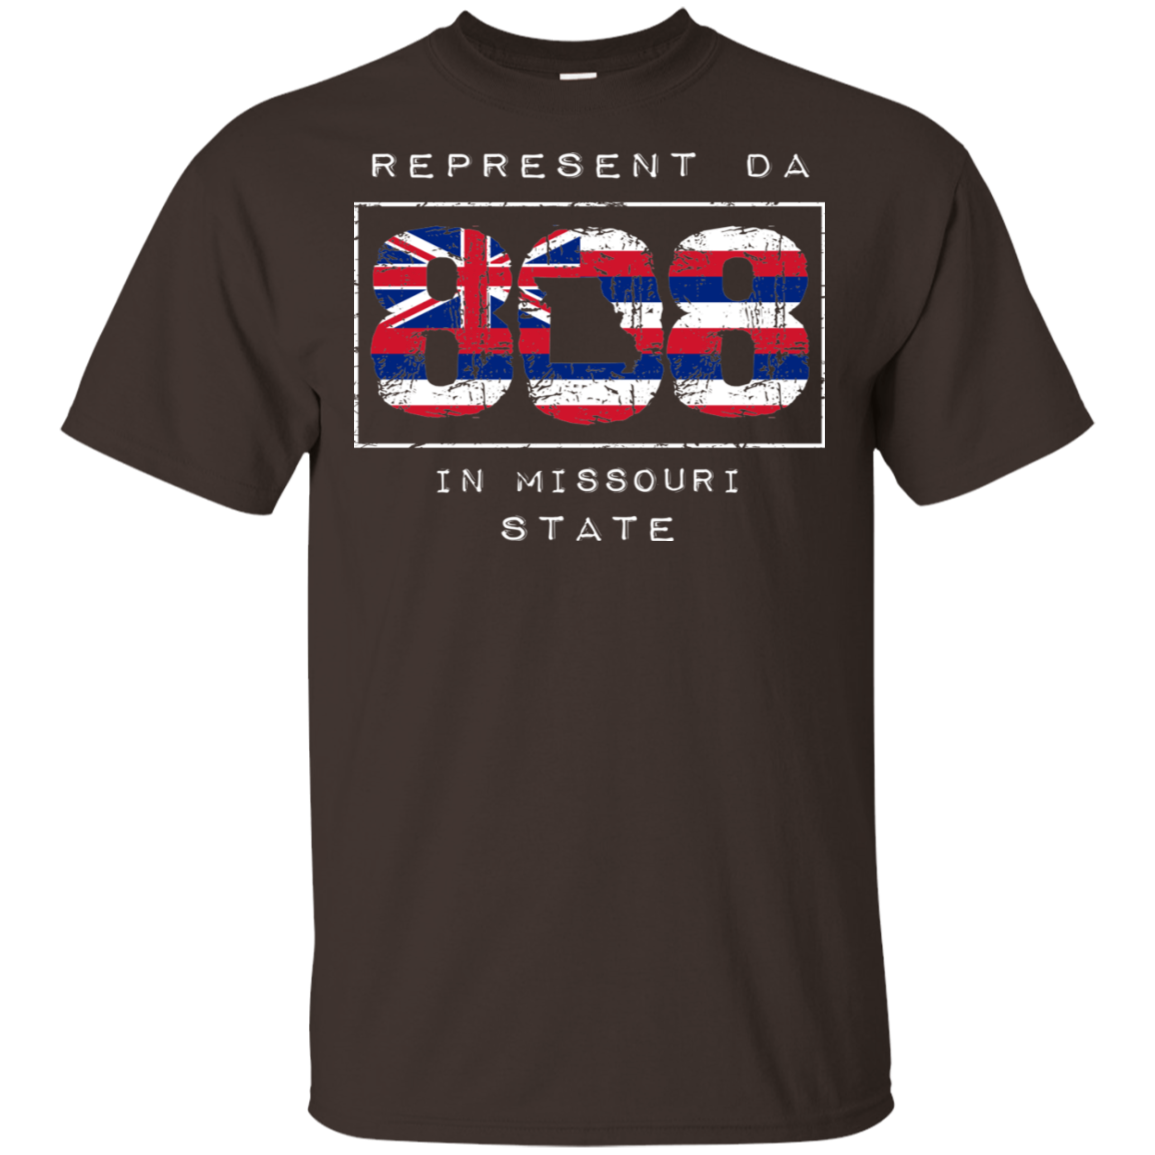 Rep Da 808 In Missouri State Ultra Cotton T-Shirt, T-Shirts, Hawaii Nei All Day